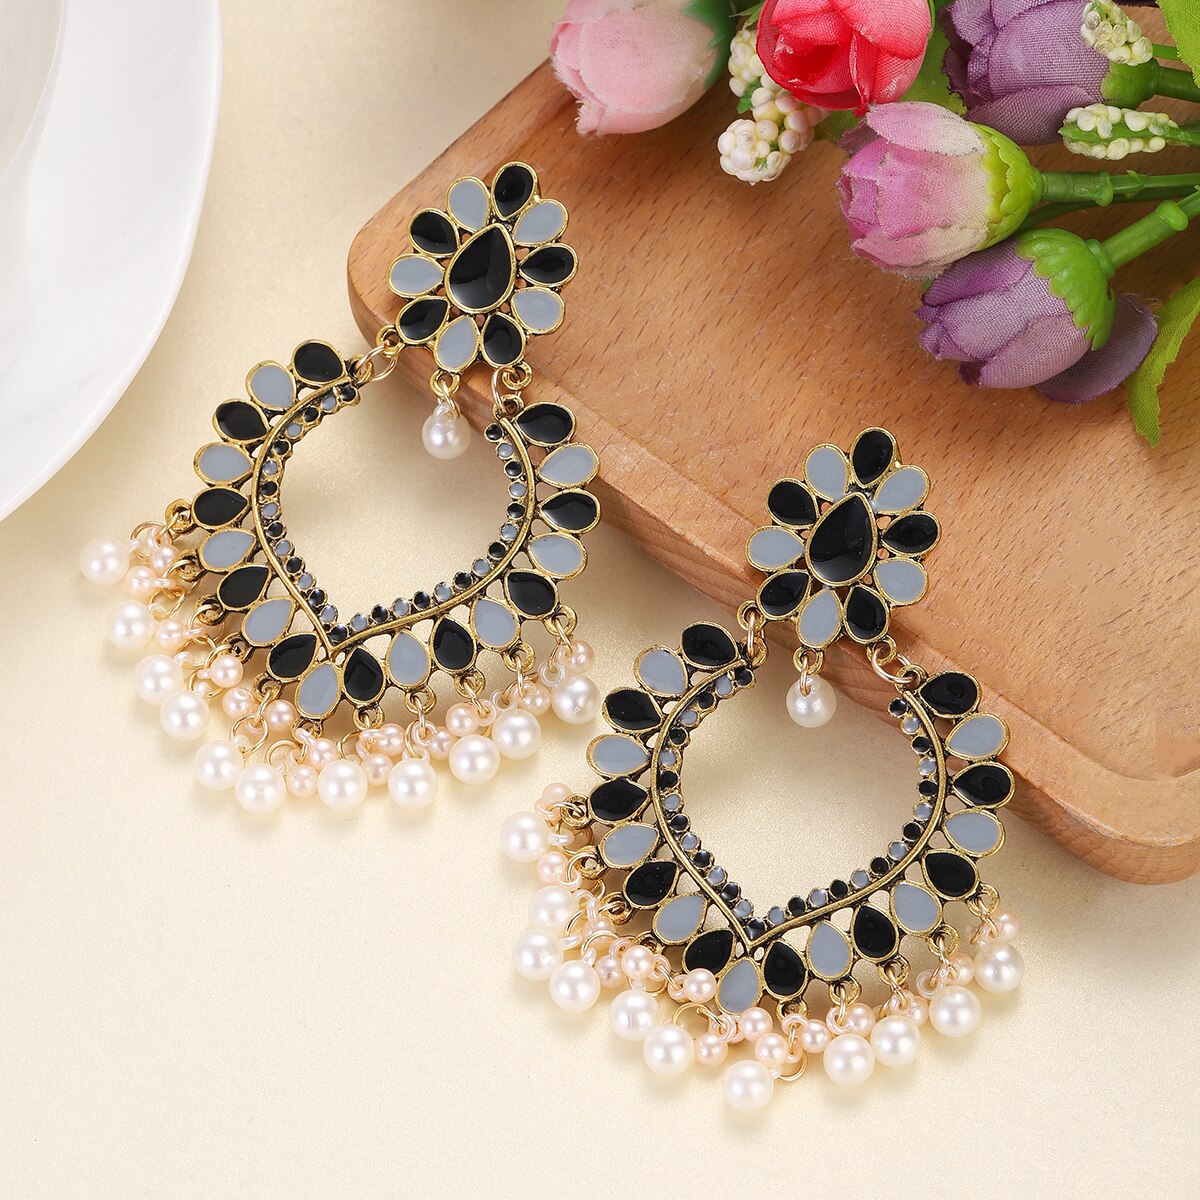 Ethnic-Vintage-White-Black-Heart-Shape-Dangle-Earrings-Female-Hollow-Flower-Pearl-Tassel-Earrings-In-1005005057346548-5